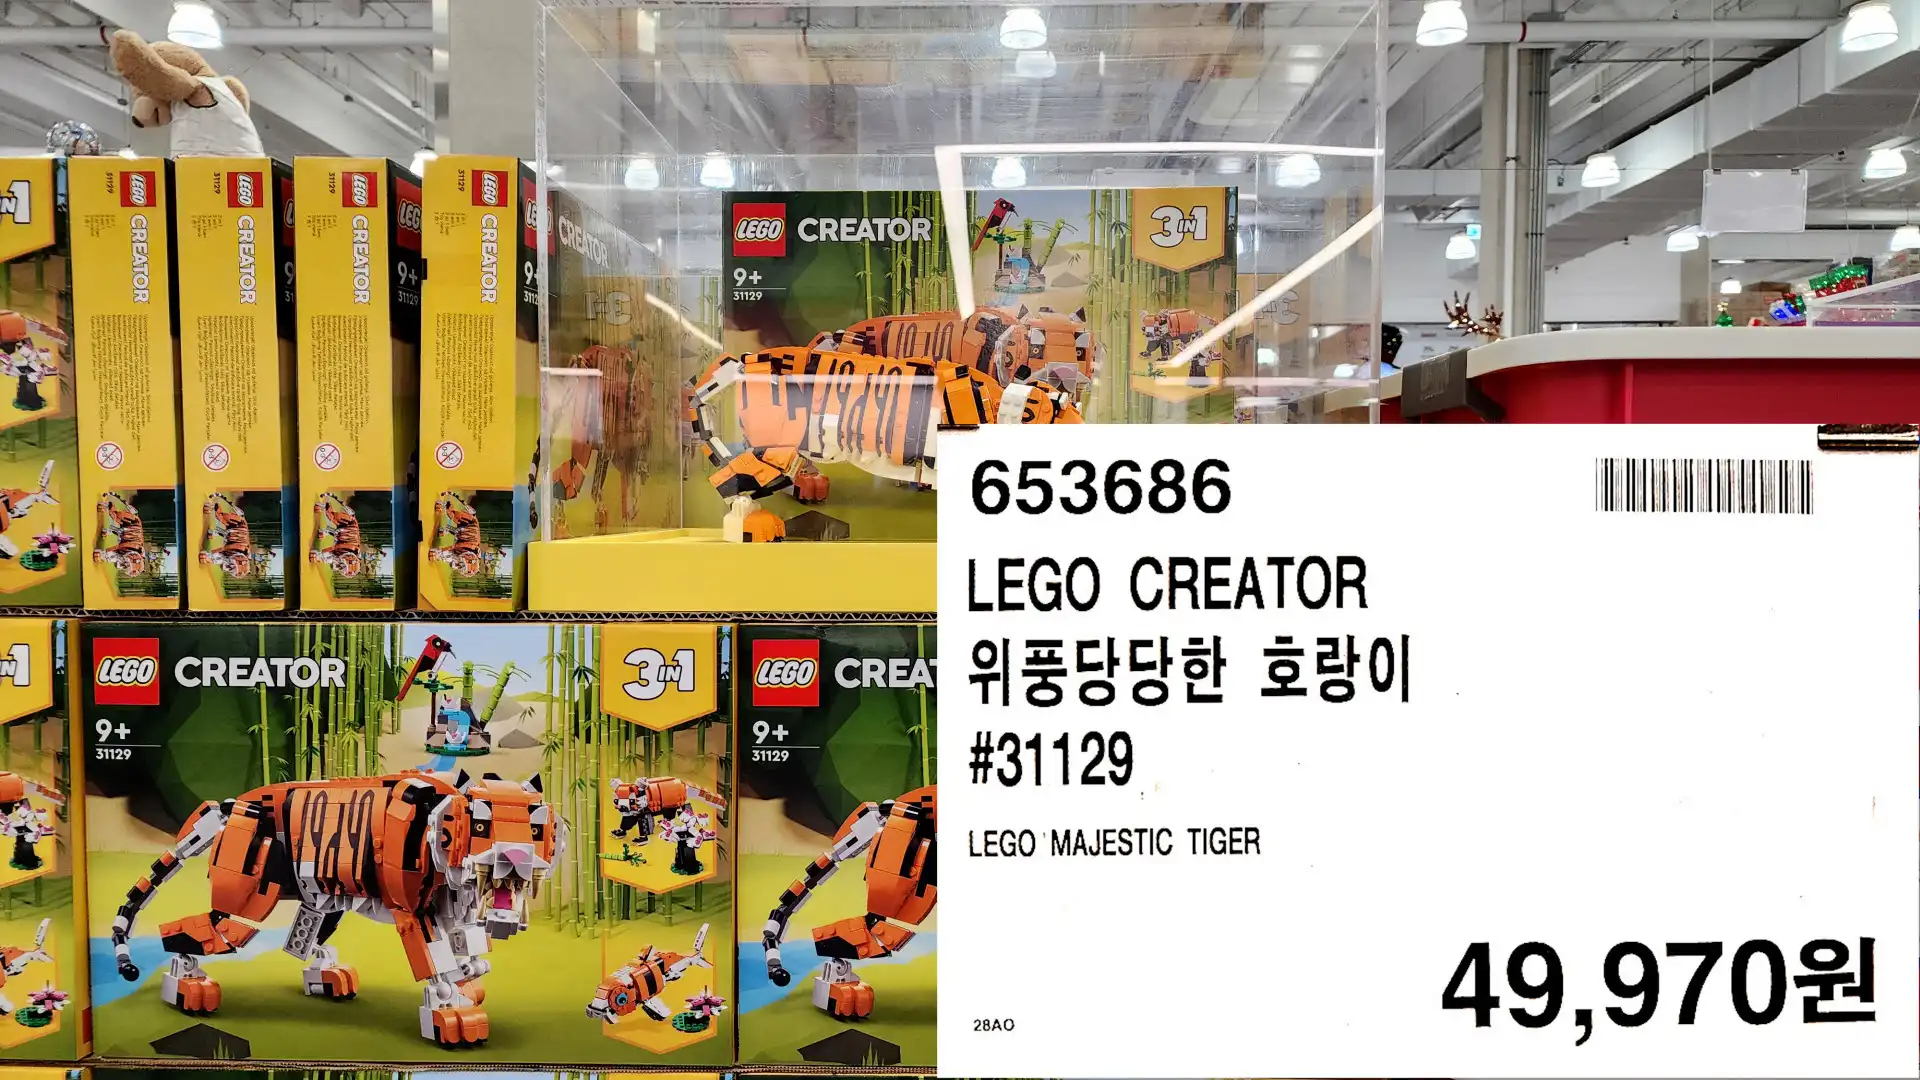 LEGO CREATOR
위풍당당한 호랑이
#31129
LEGO MAJESTIC TIGER
49,970원